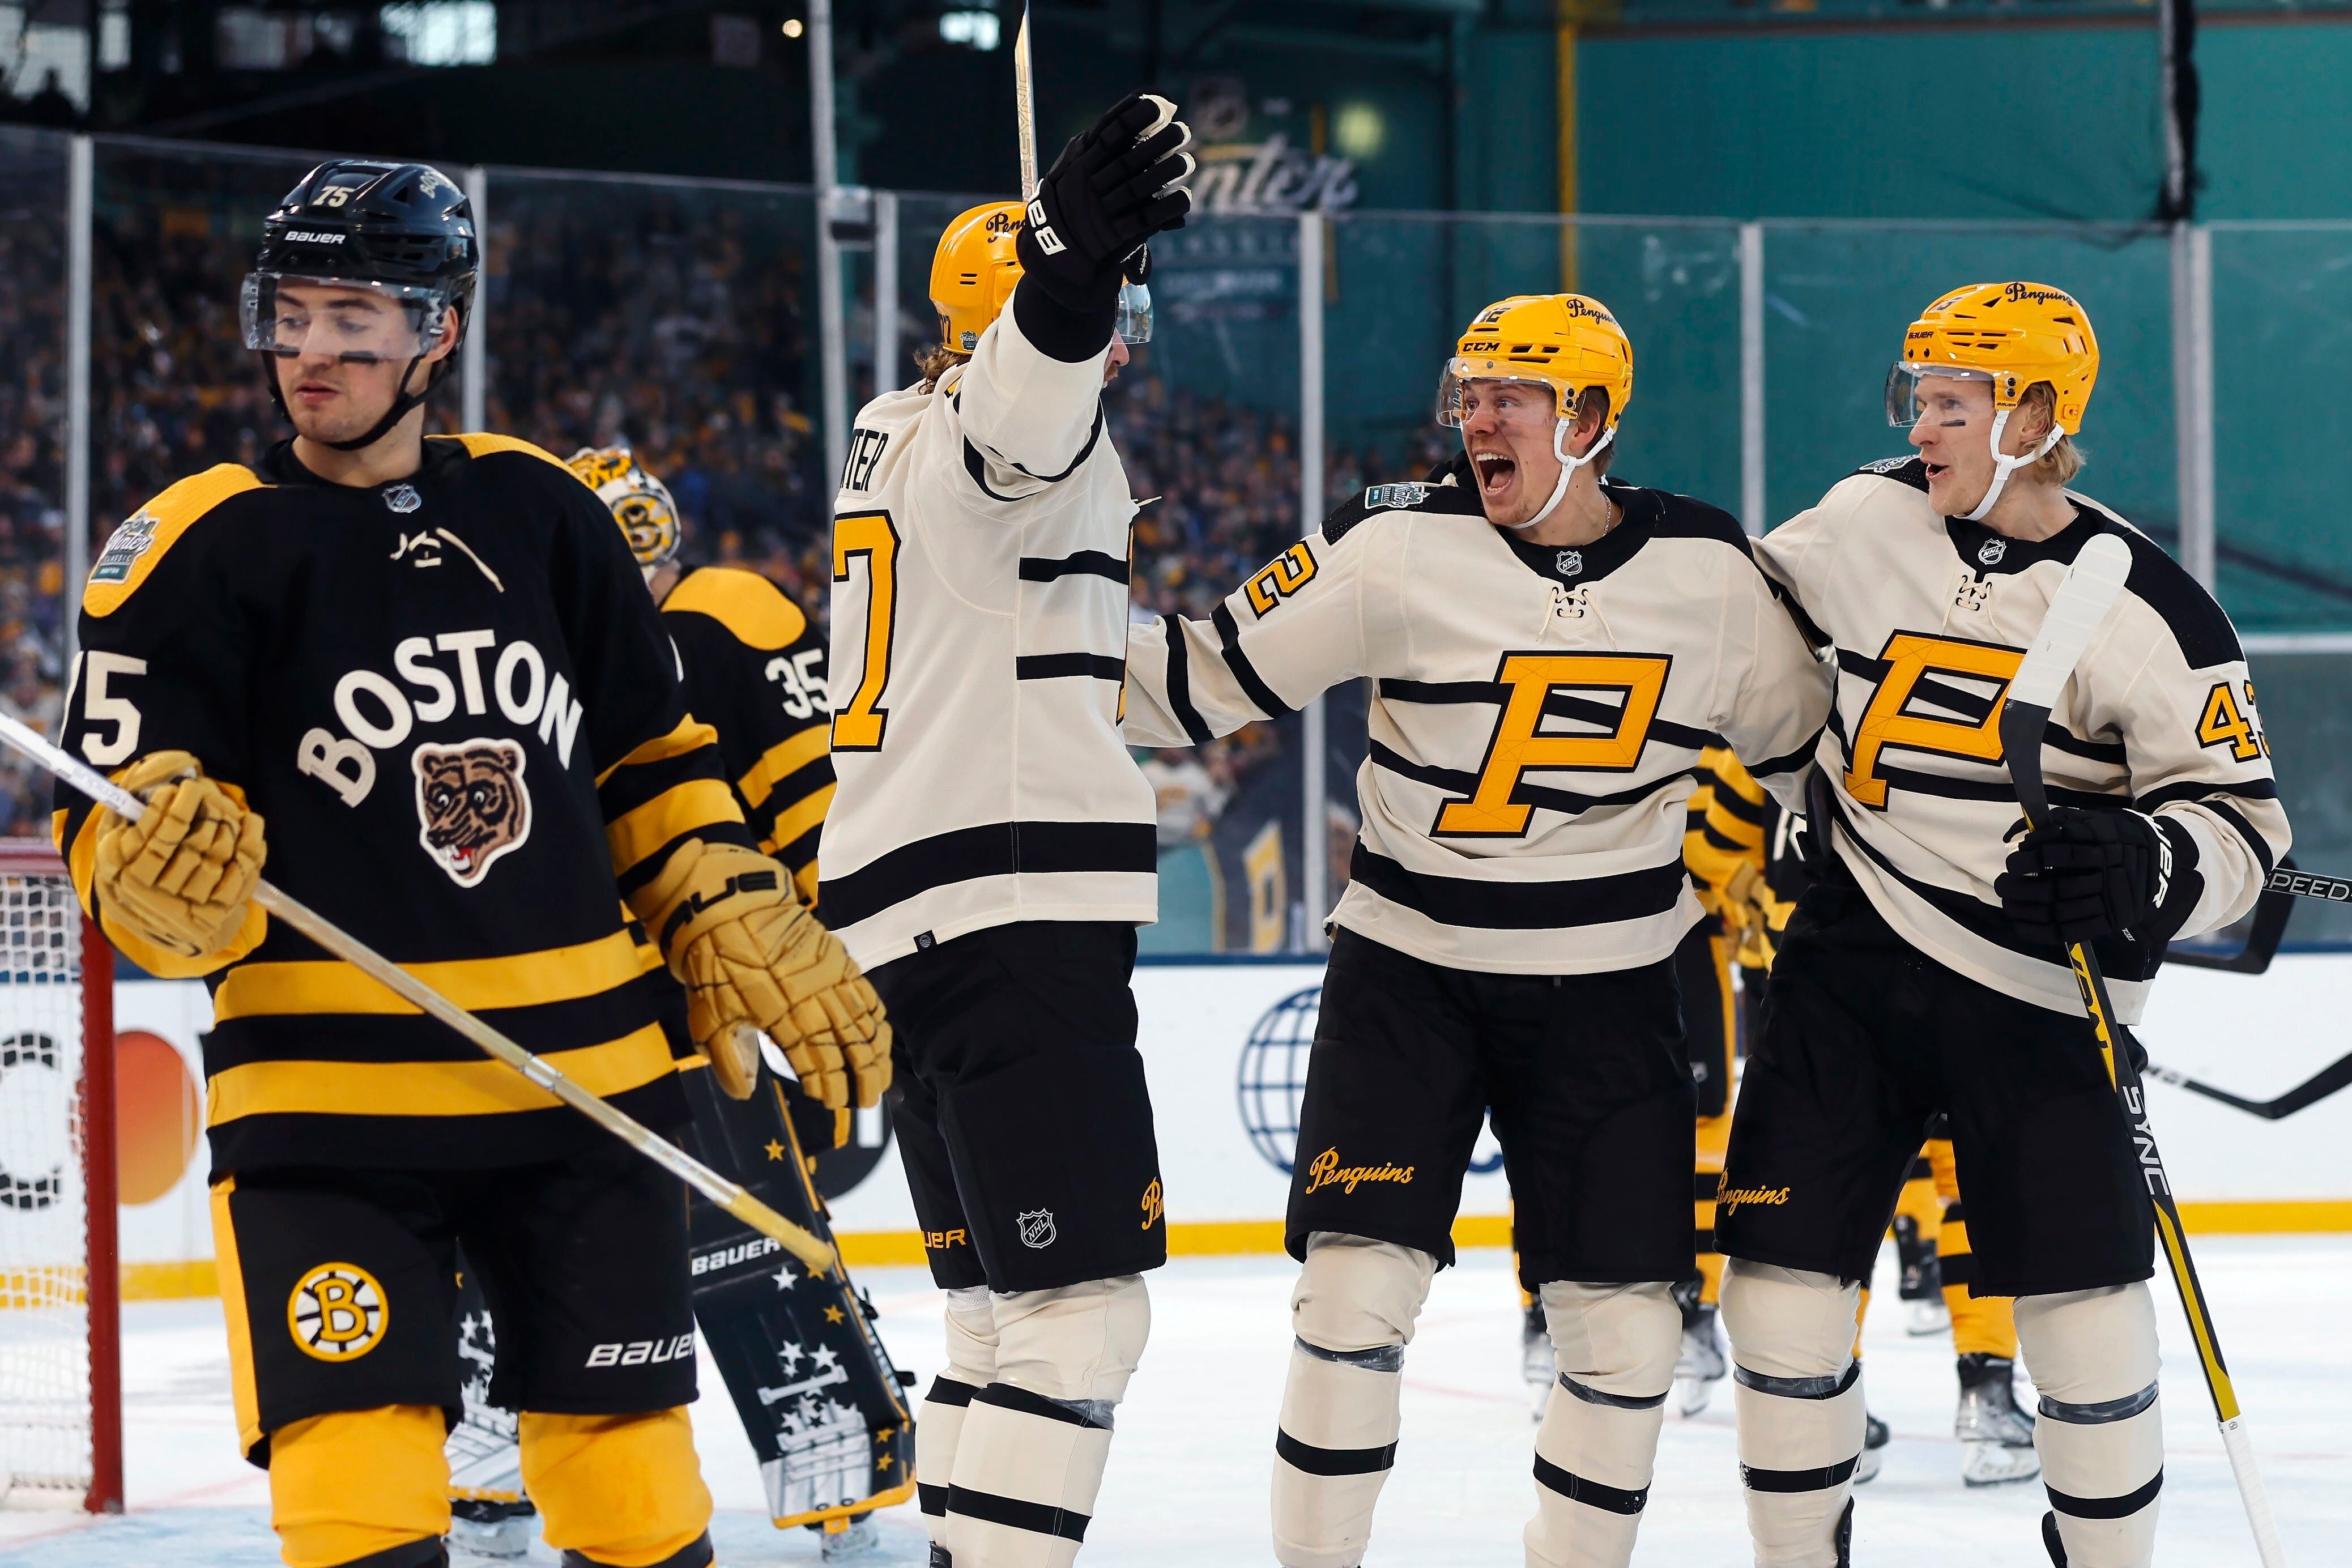 Jake DeBrusk scores twice as Bruins edge Penguins at Winter Classic 